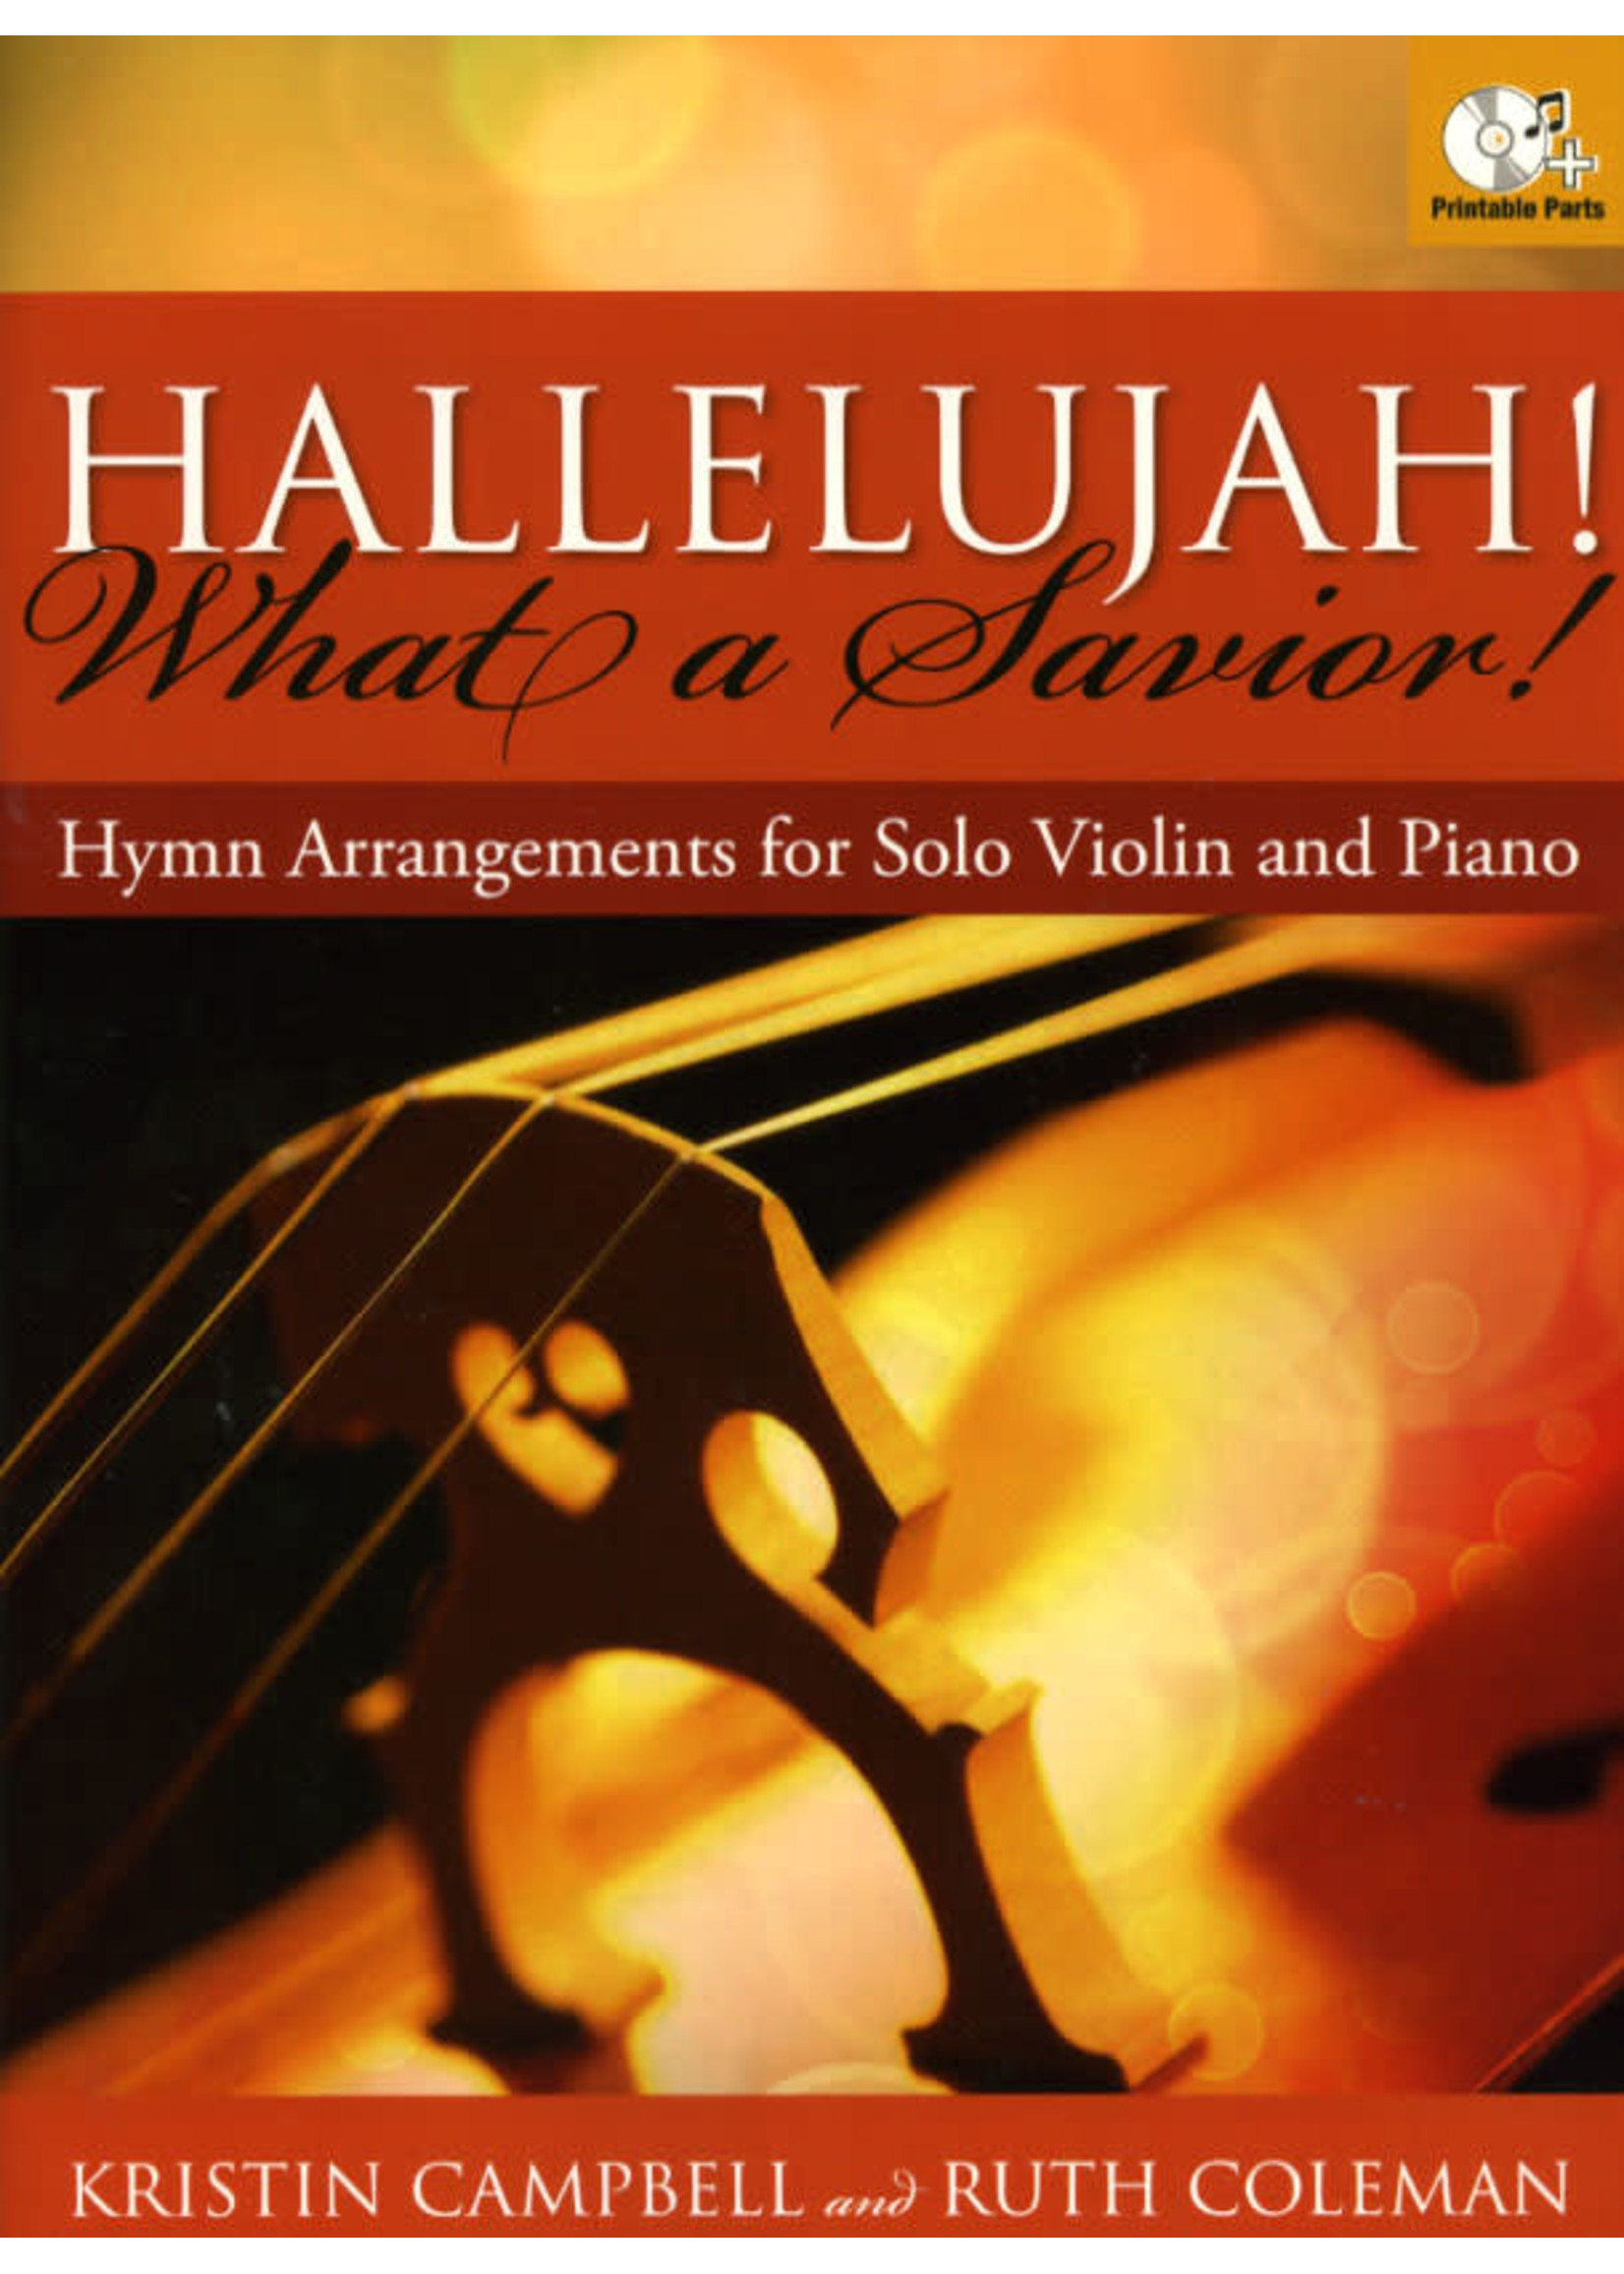 Hallelujah What a Savior Violin Solos (Campbell/Coleman)